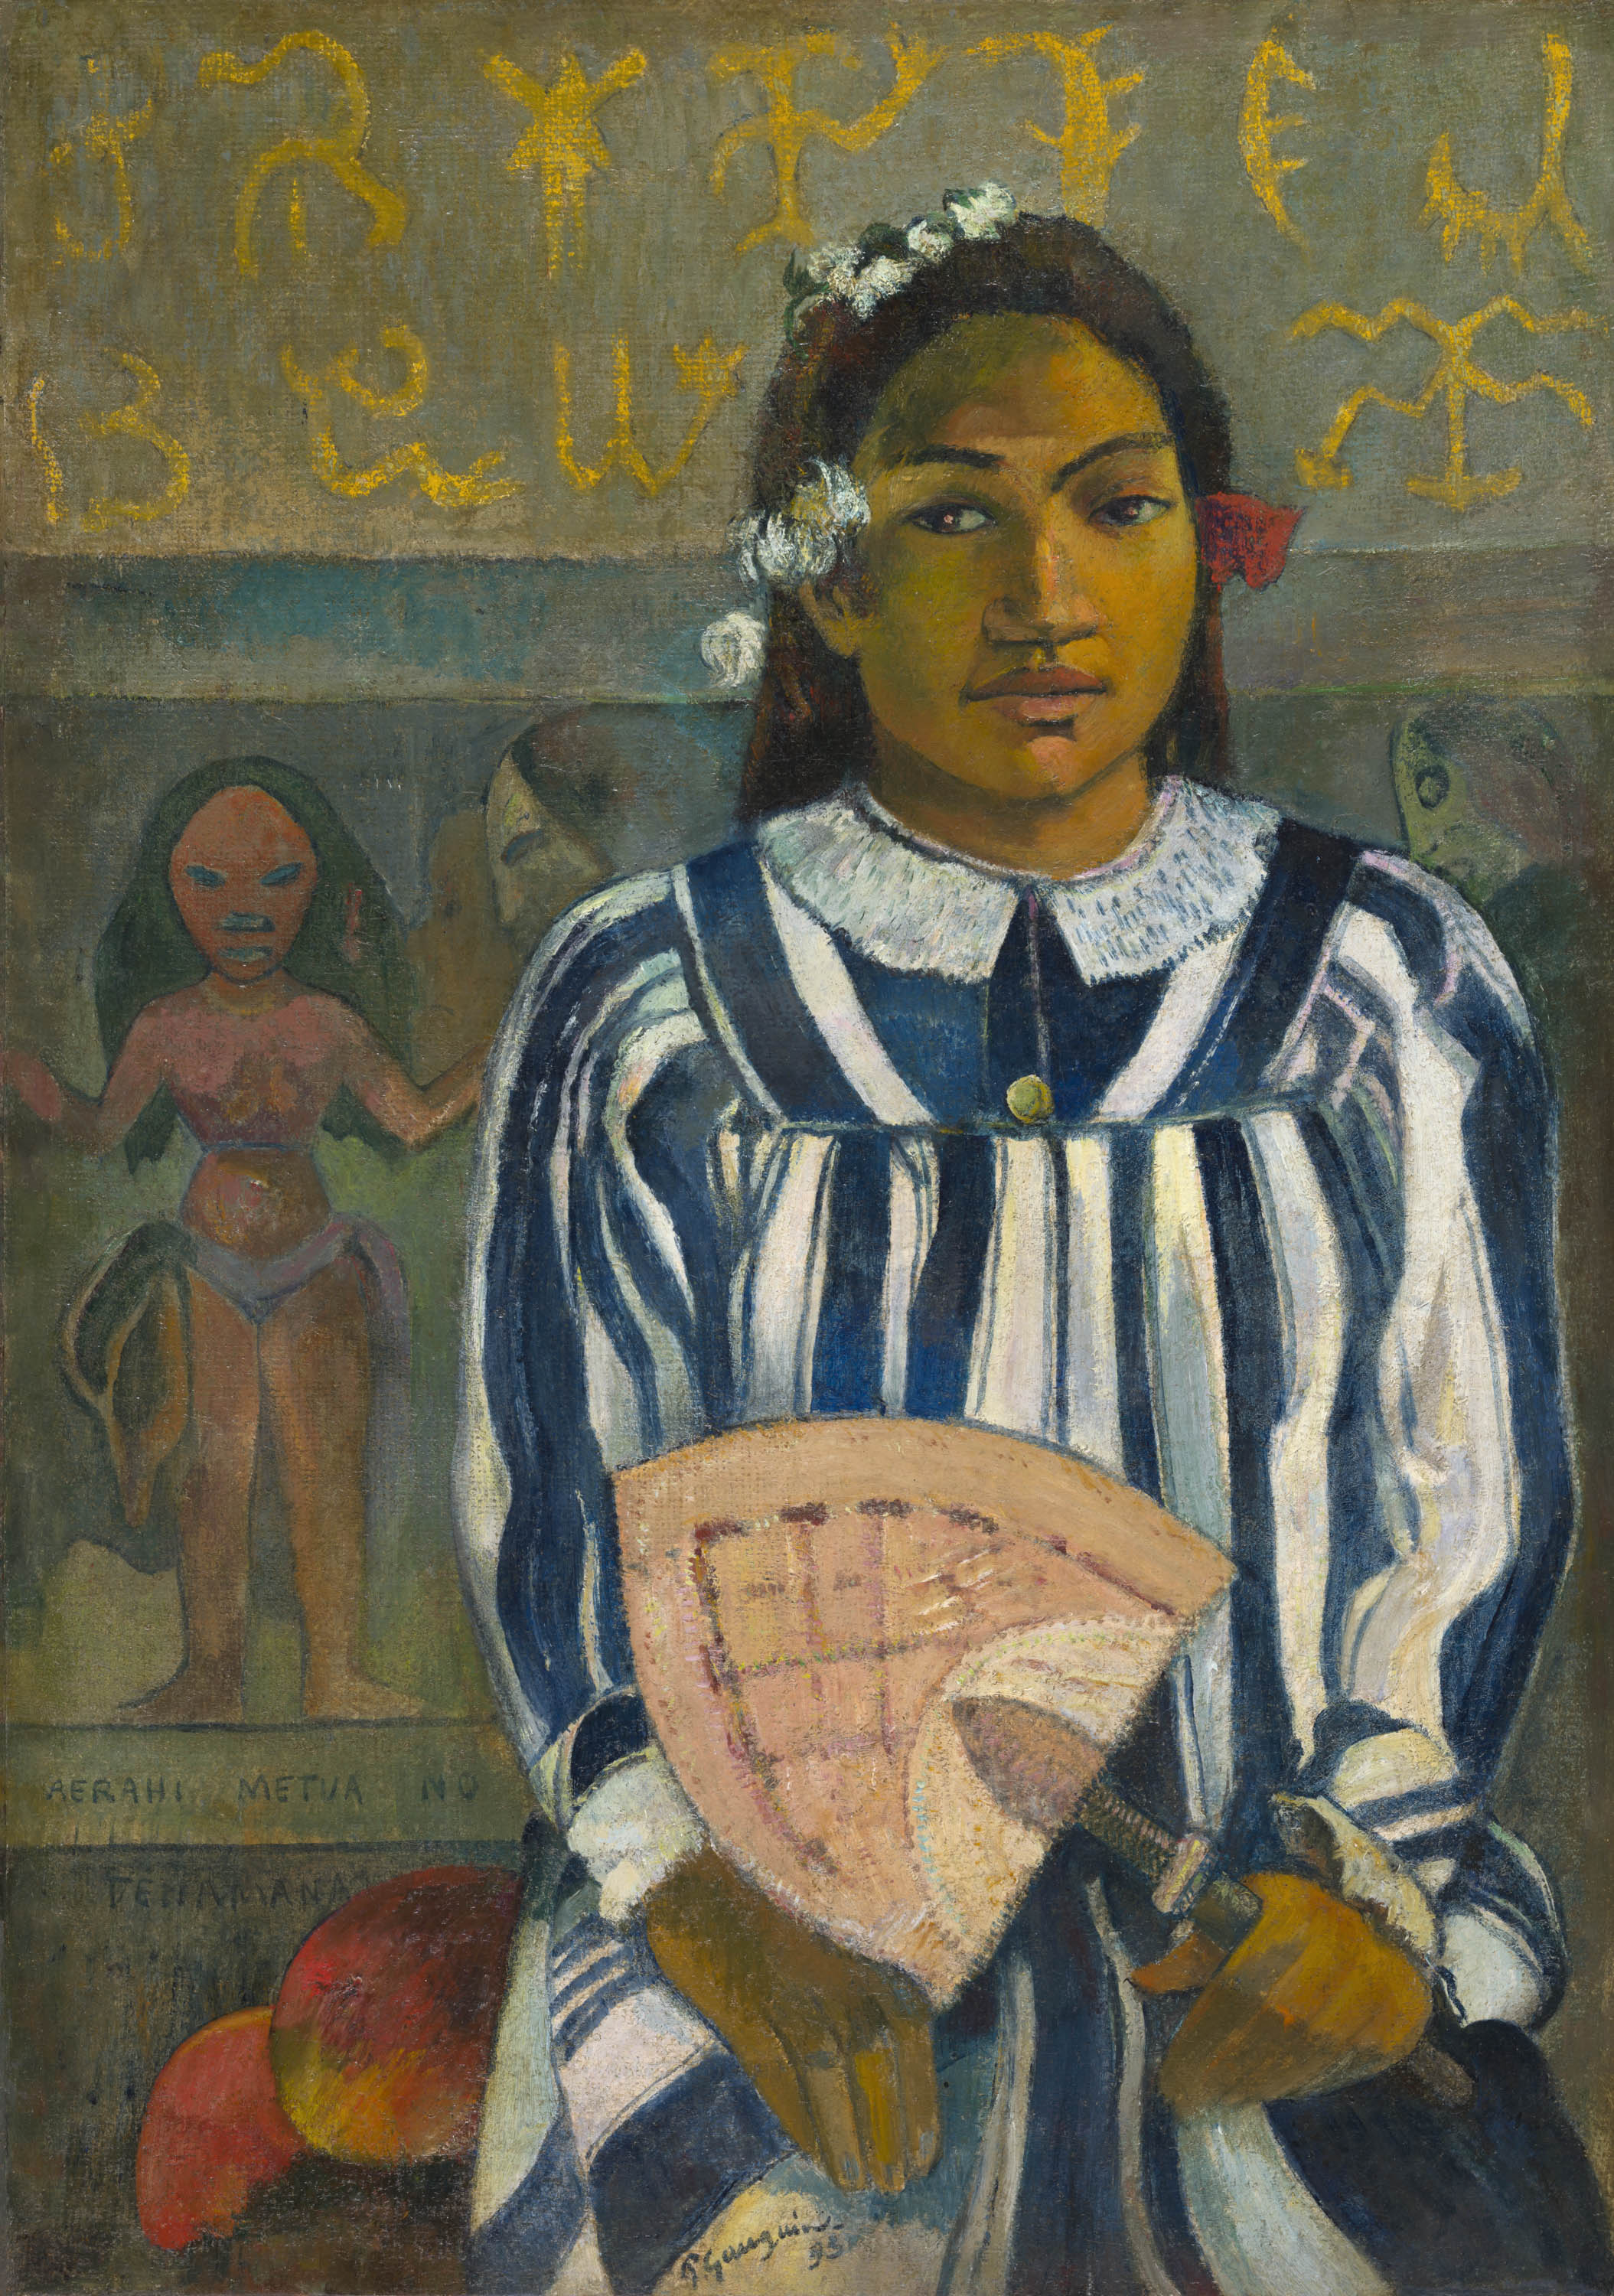 La célèbre toile Merahi-metua-no-Tehamana, de Chicago, sera parmi les œuvres exposées.